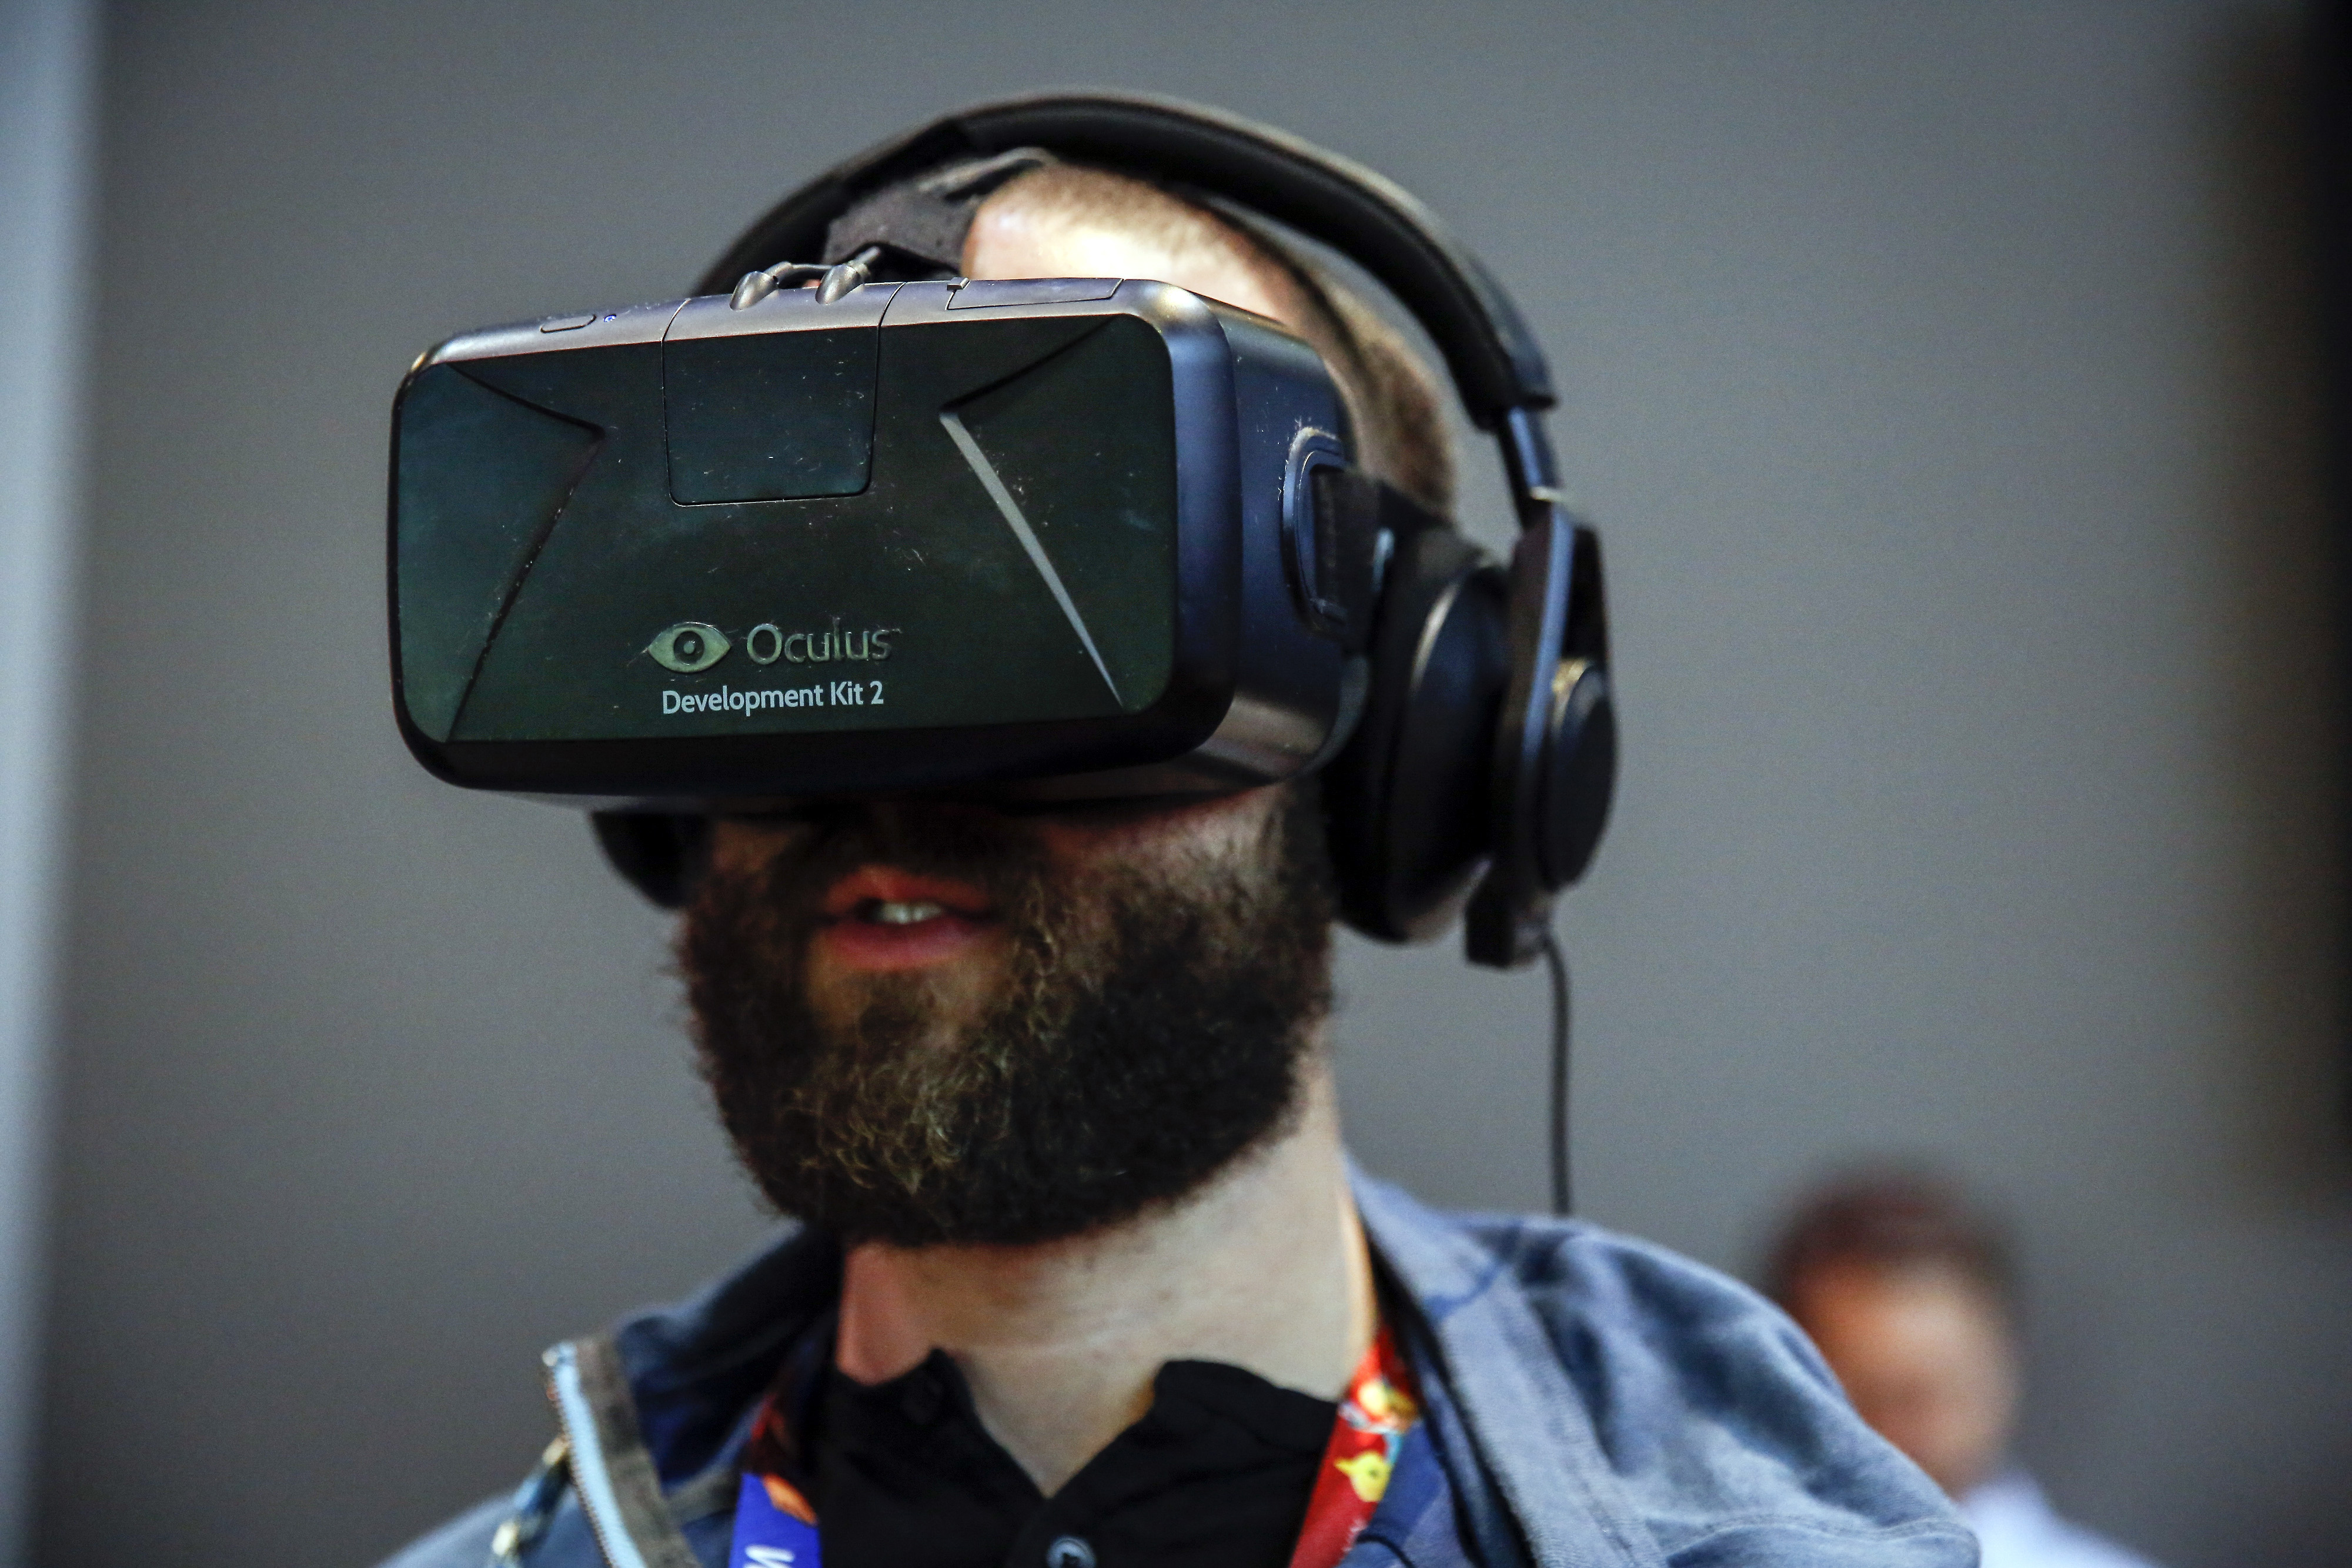 Inside The 2014 E3 Electronic Entertainment Expo